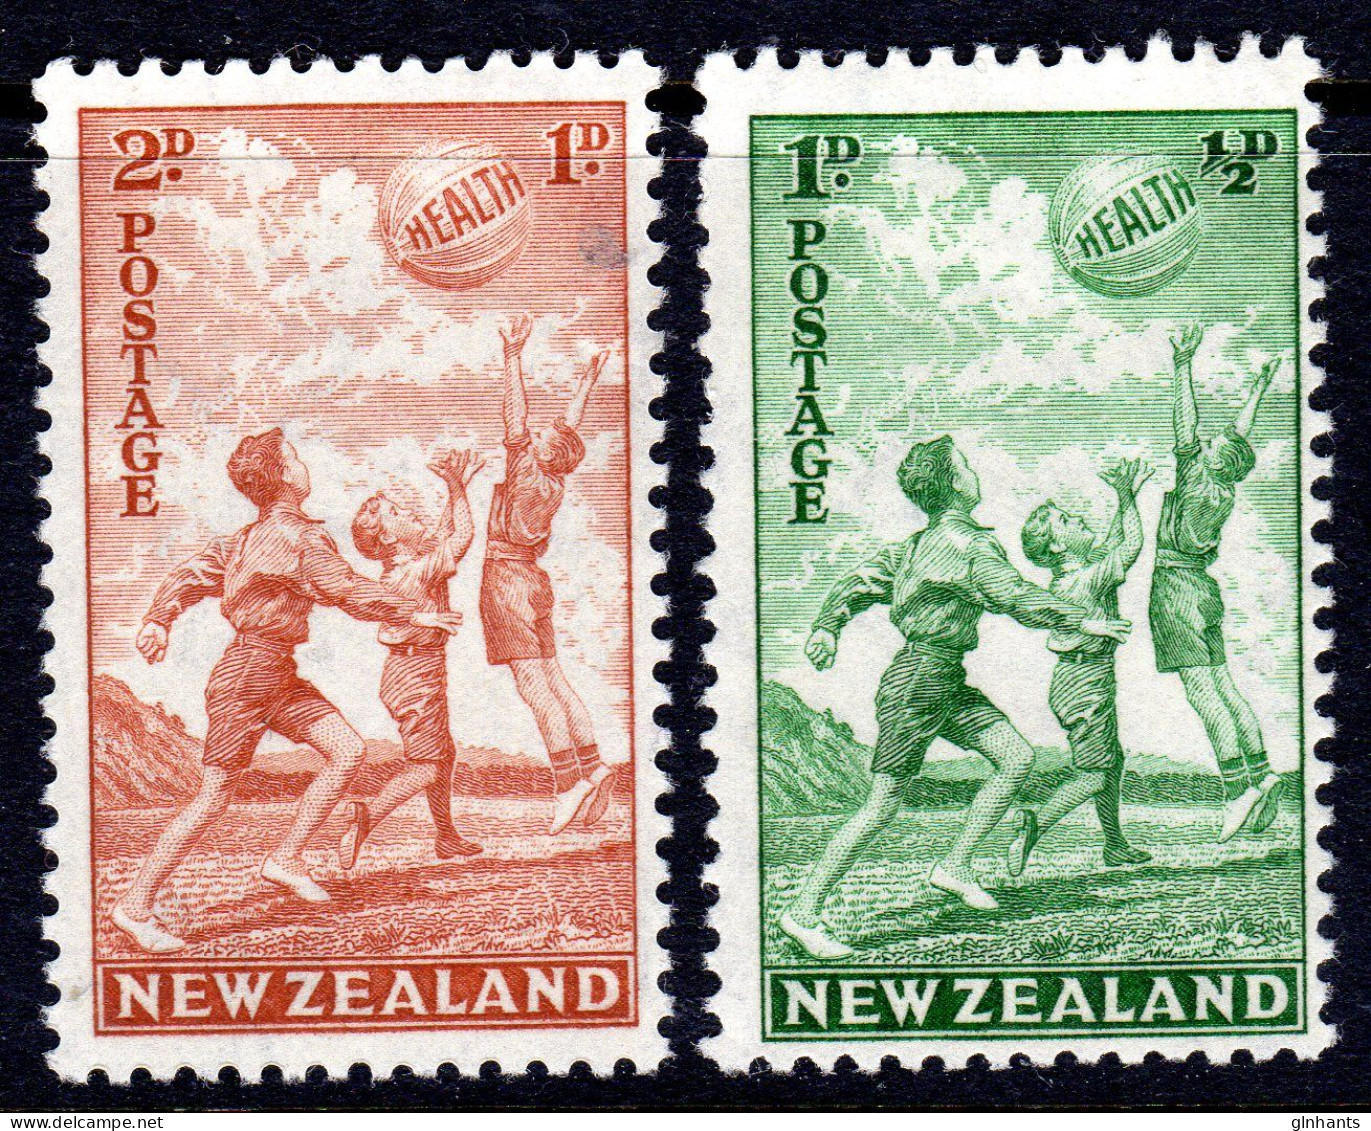 NEW ZEALAND NZ - 1940 HEALTH SET (2V) FINE MOUNTED MINT MM * SG 626-627 - Neufs